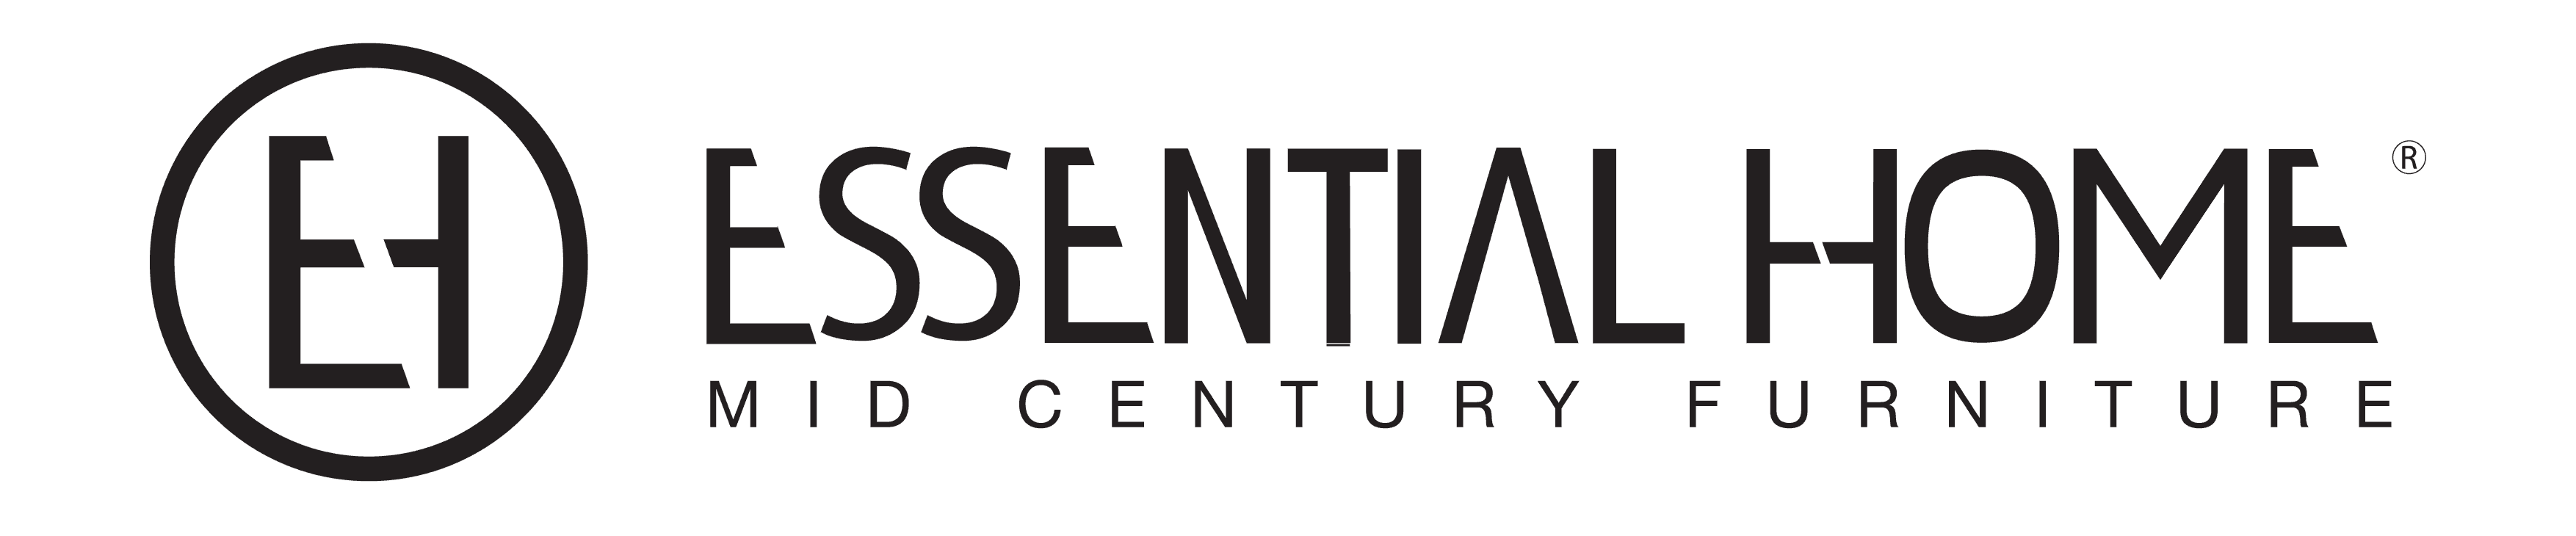 Century Furniture Logo - Samples of Essential Home | Mid Century Furniture